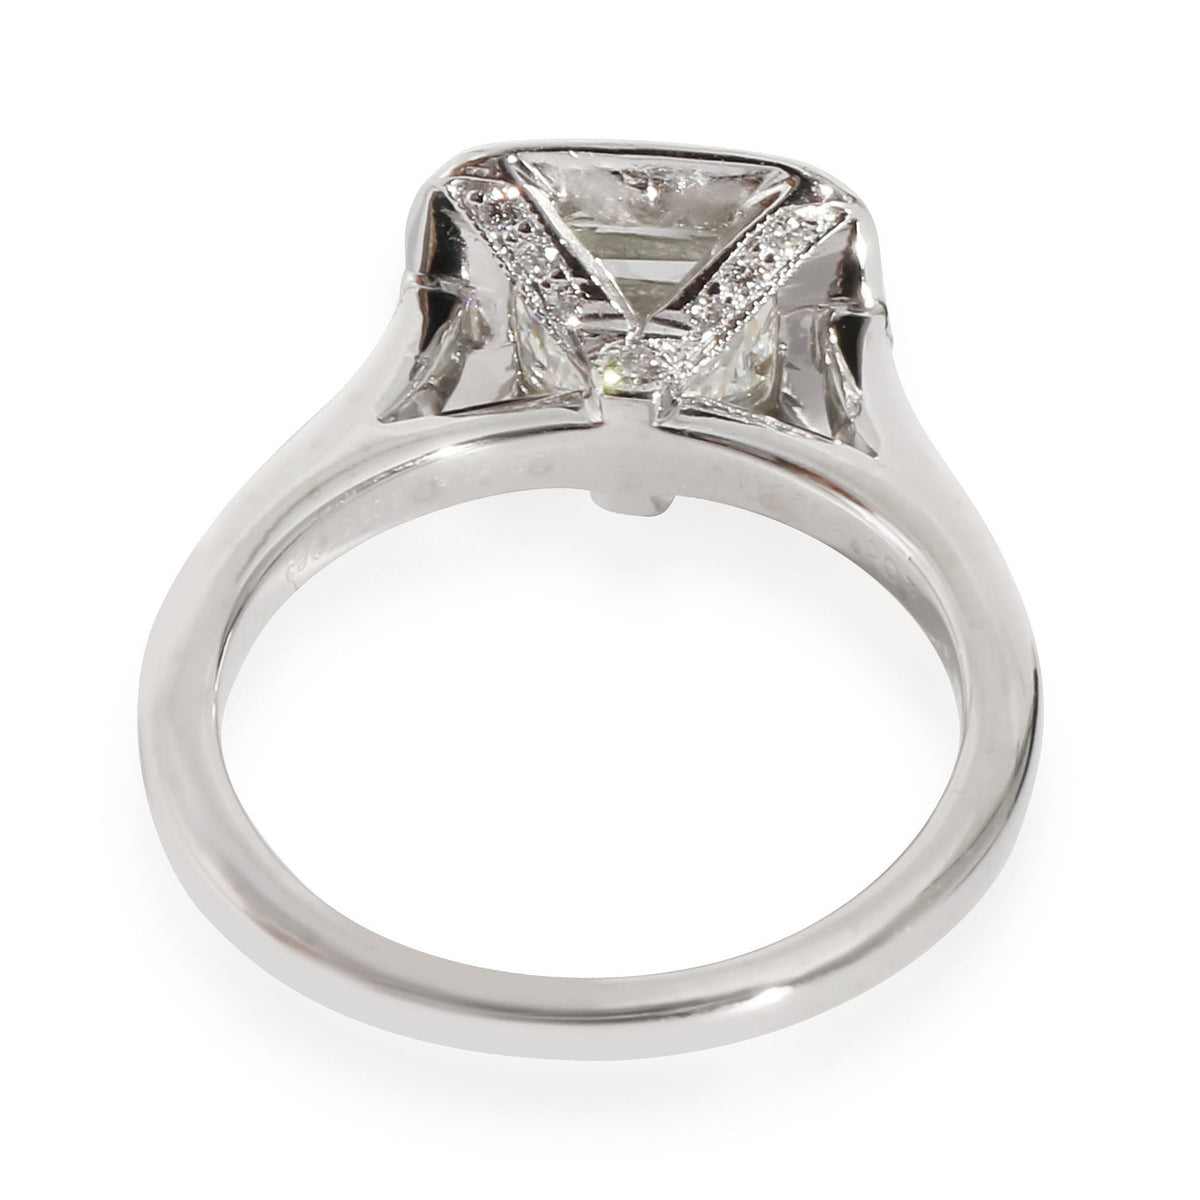 Tiffany & Co. Legacy Diamond Engagement Ring in Platinum H VS1 2 CTW